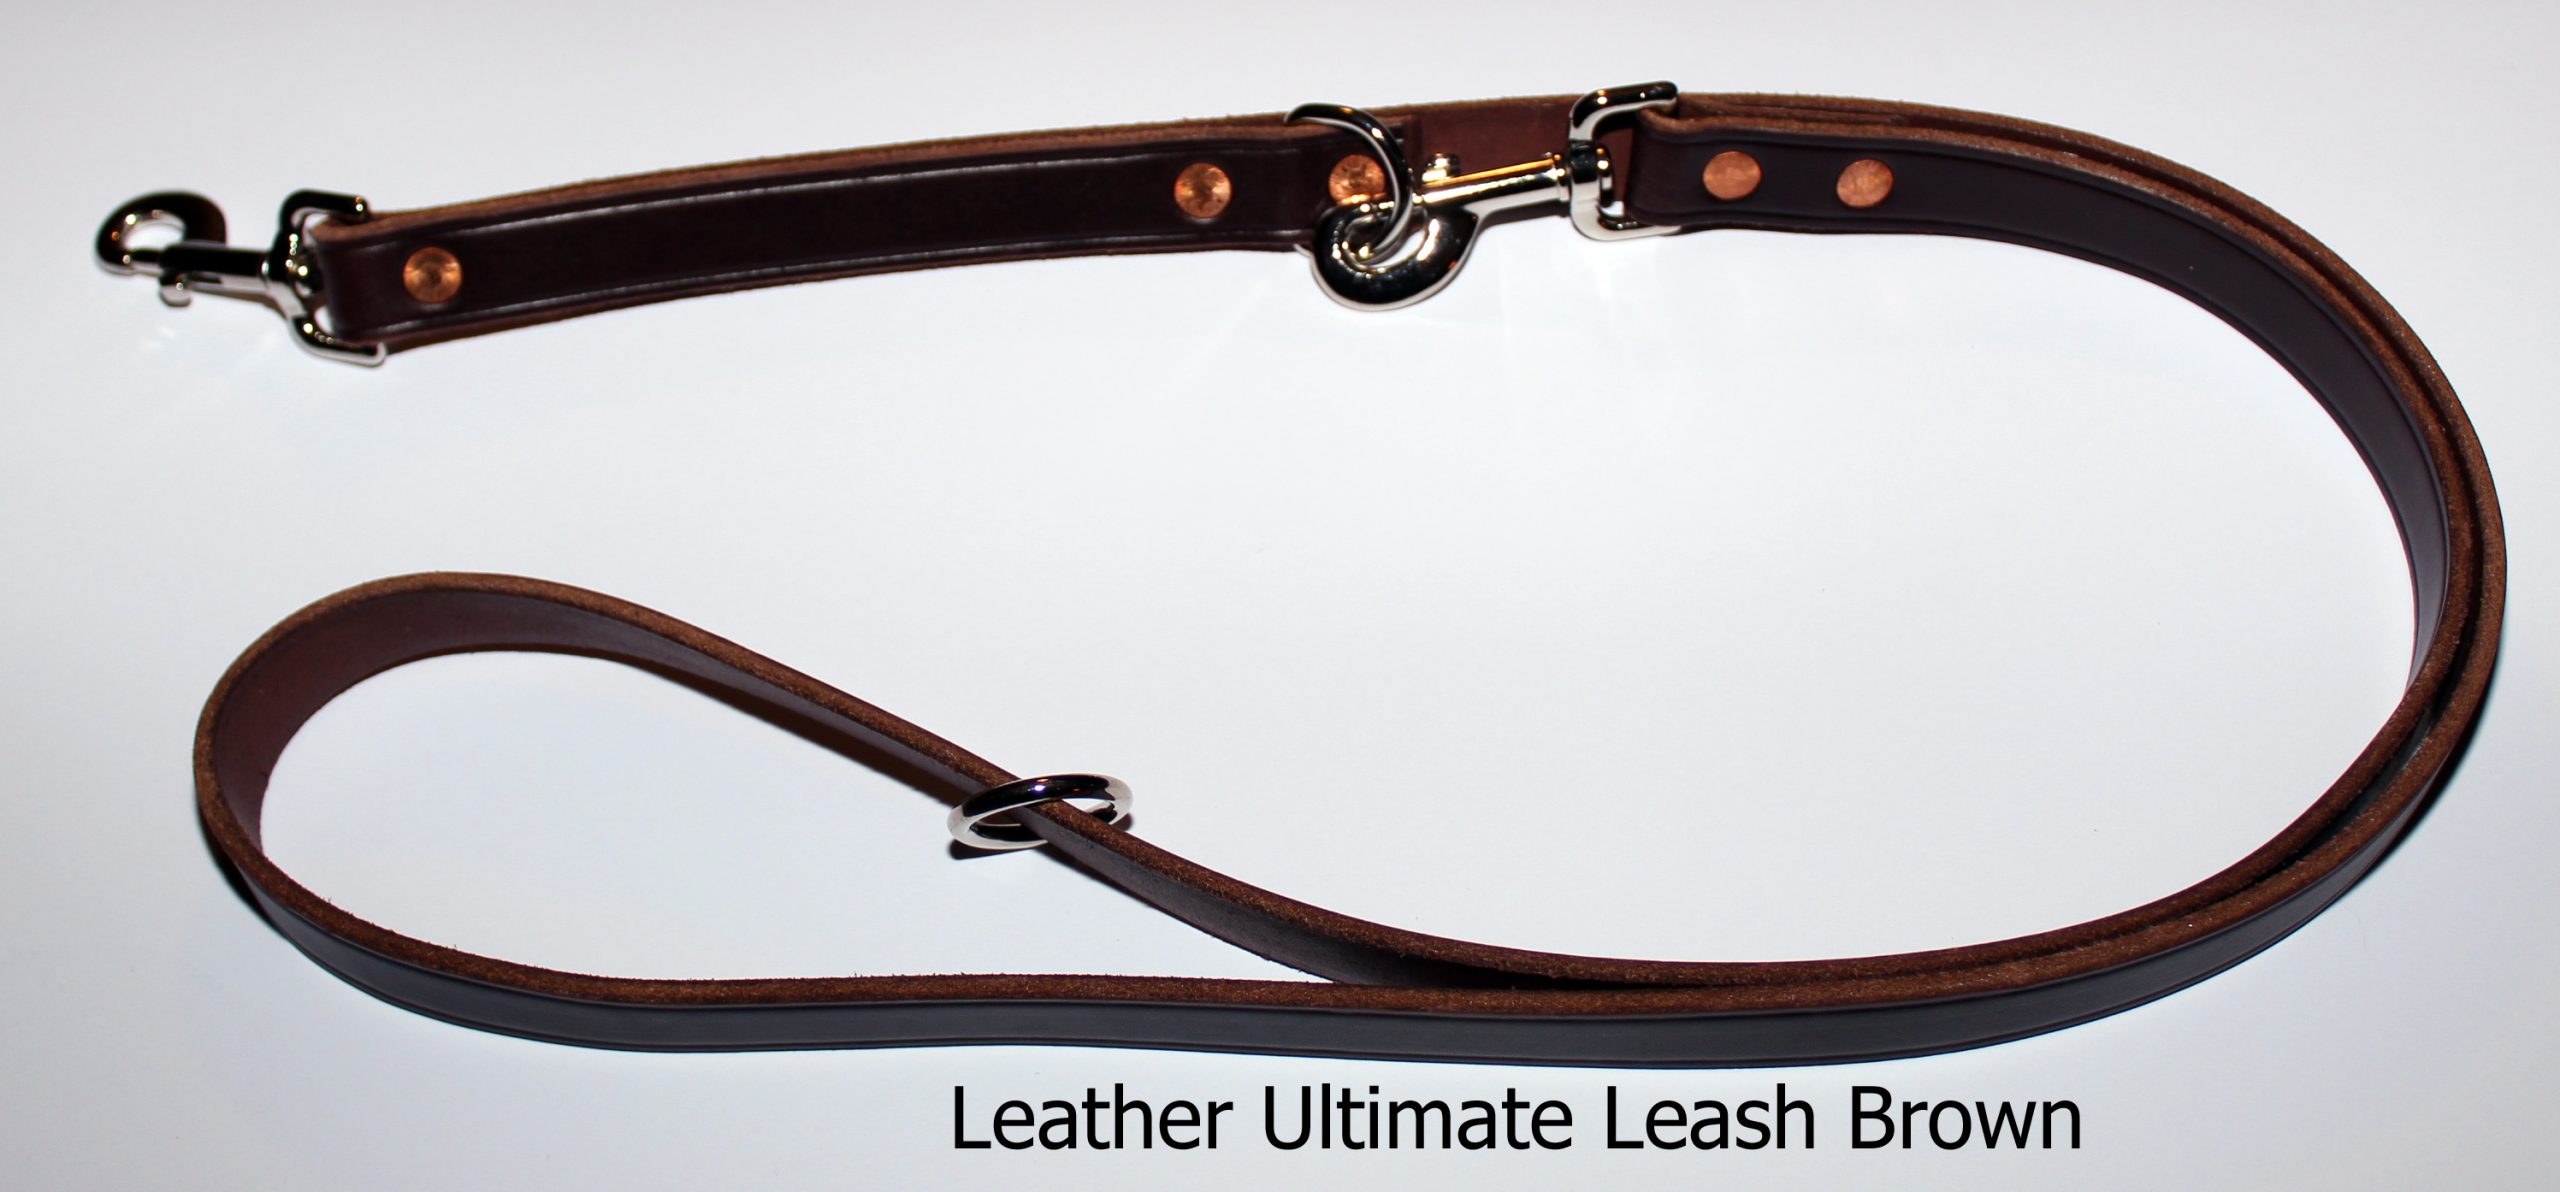 high quality leather dog leash